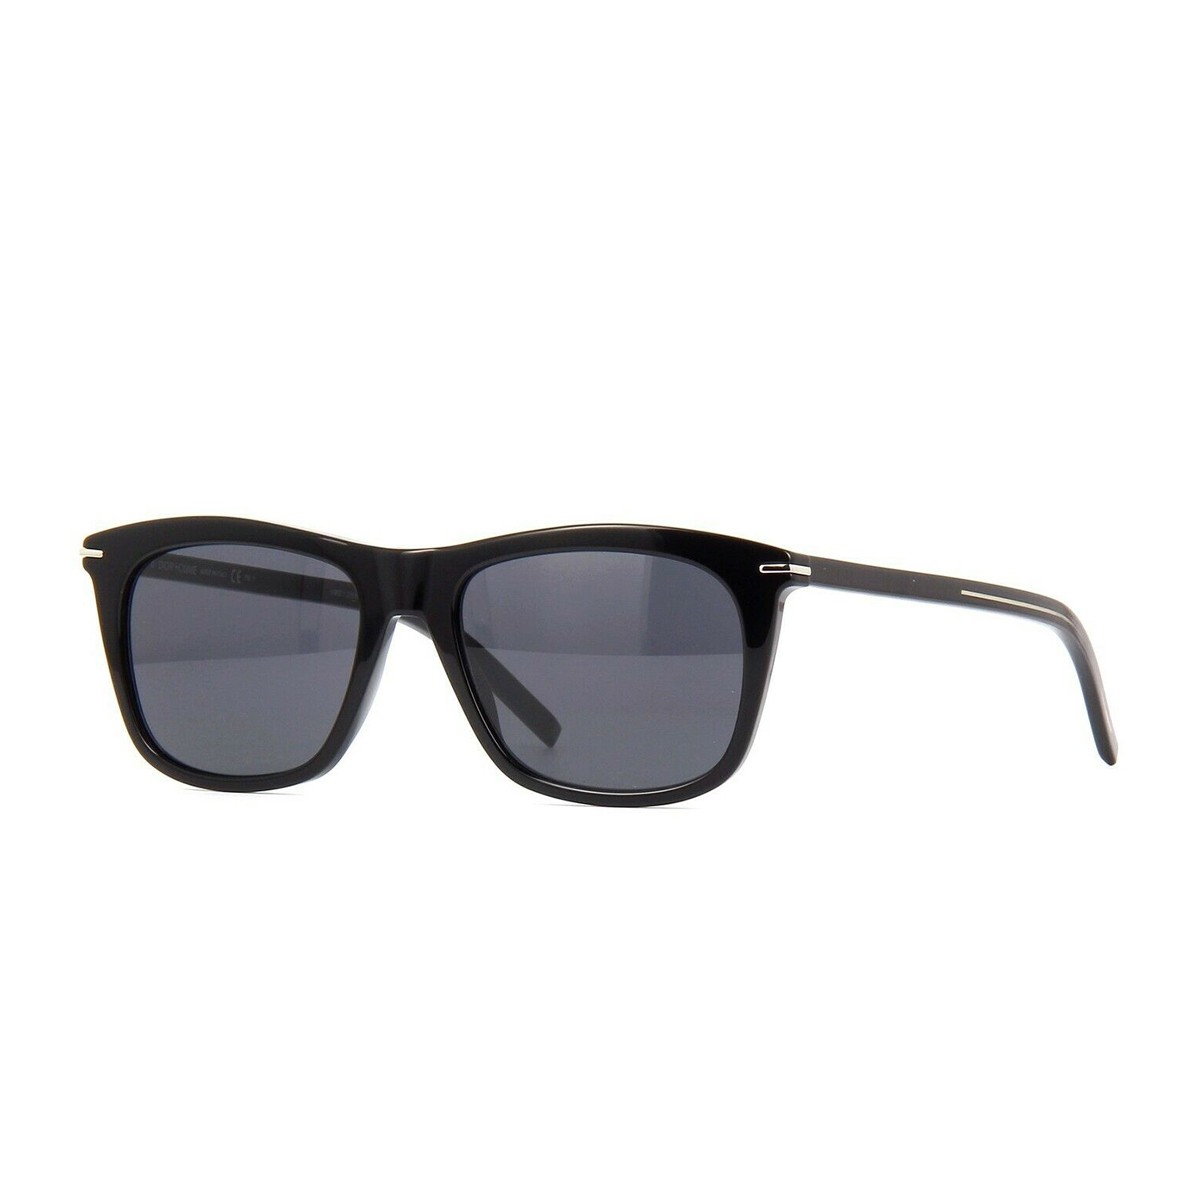 Dior Blacktie 268s | Men's sunglasses